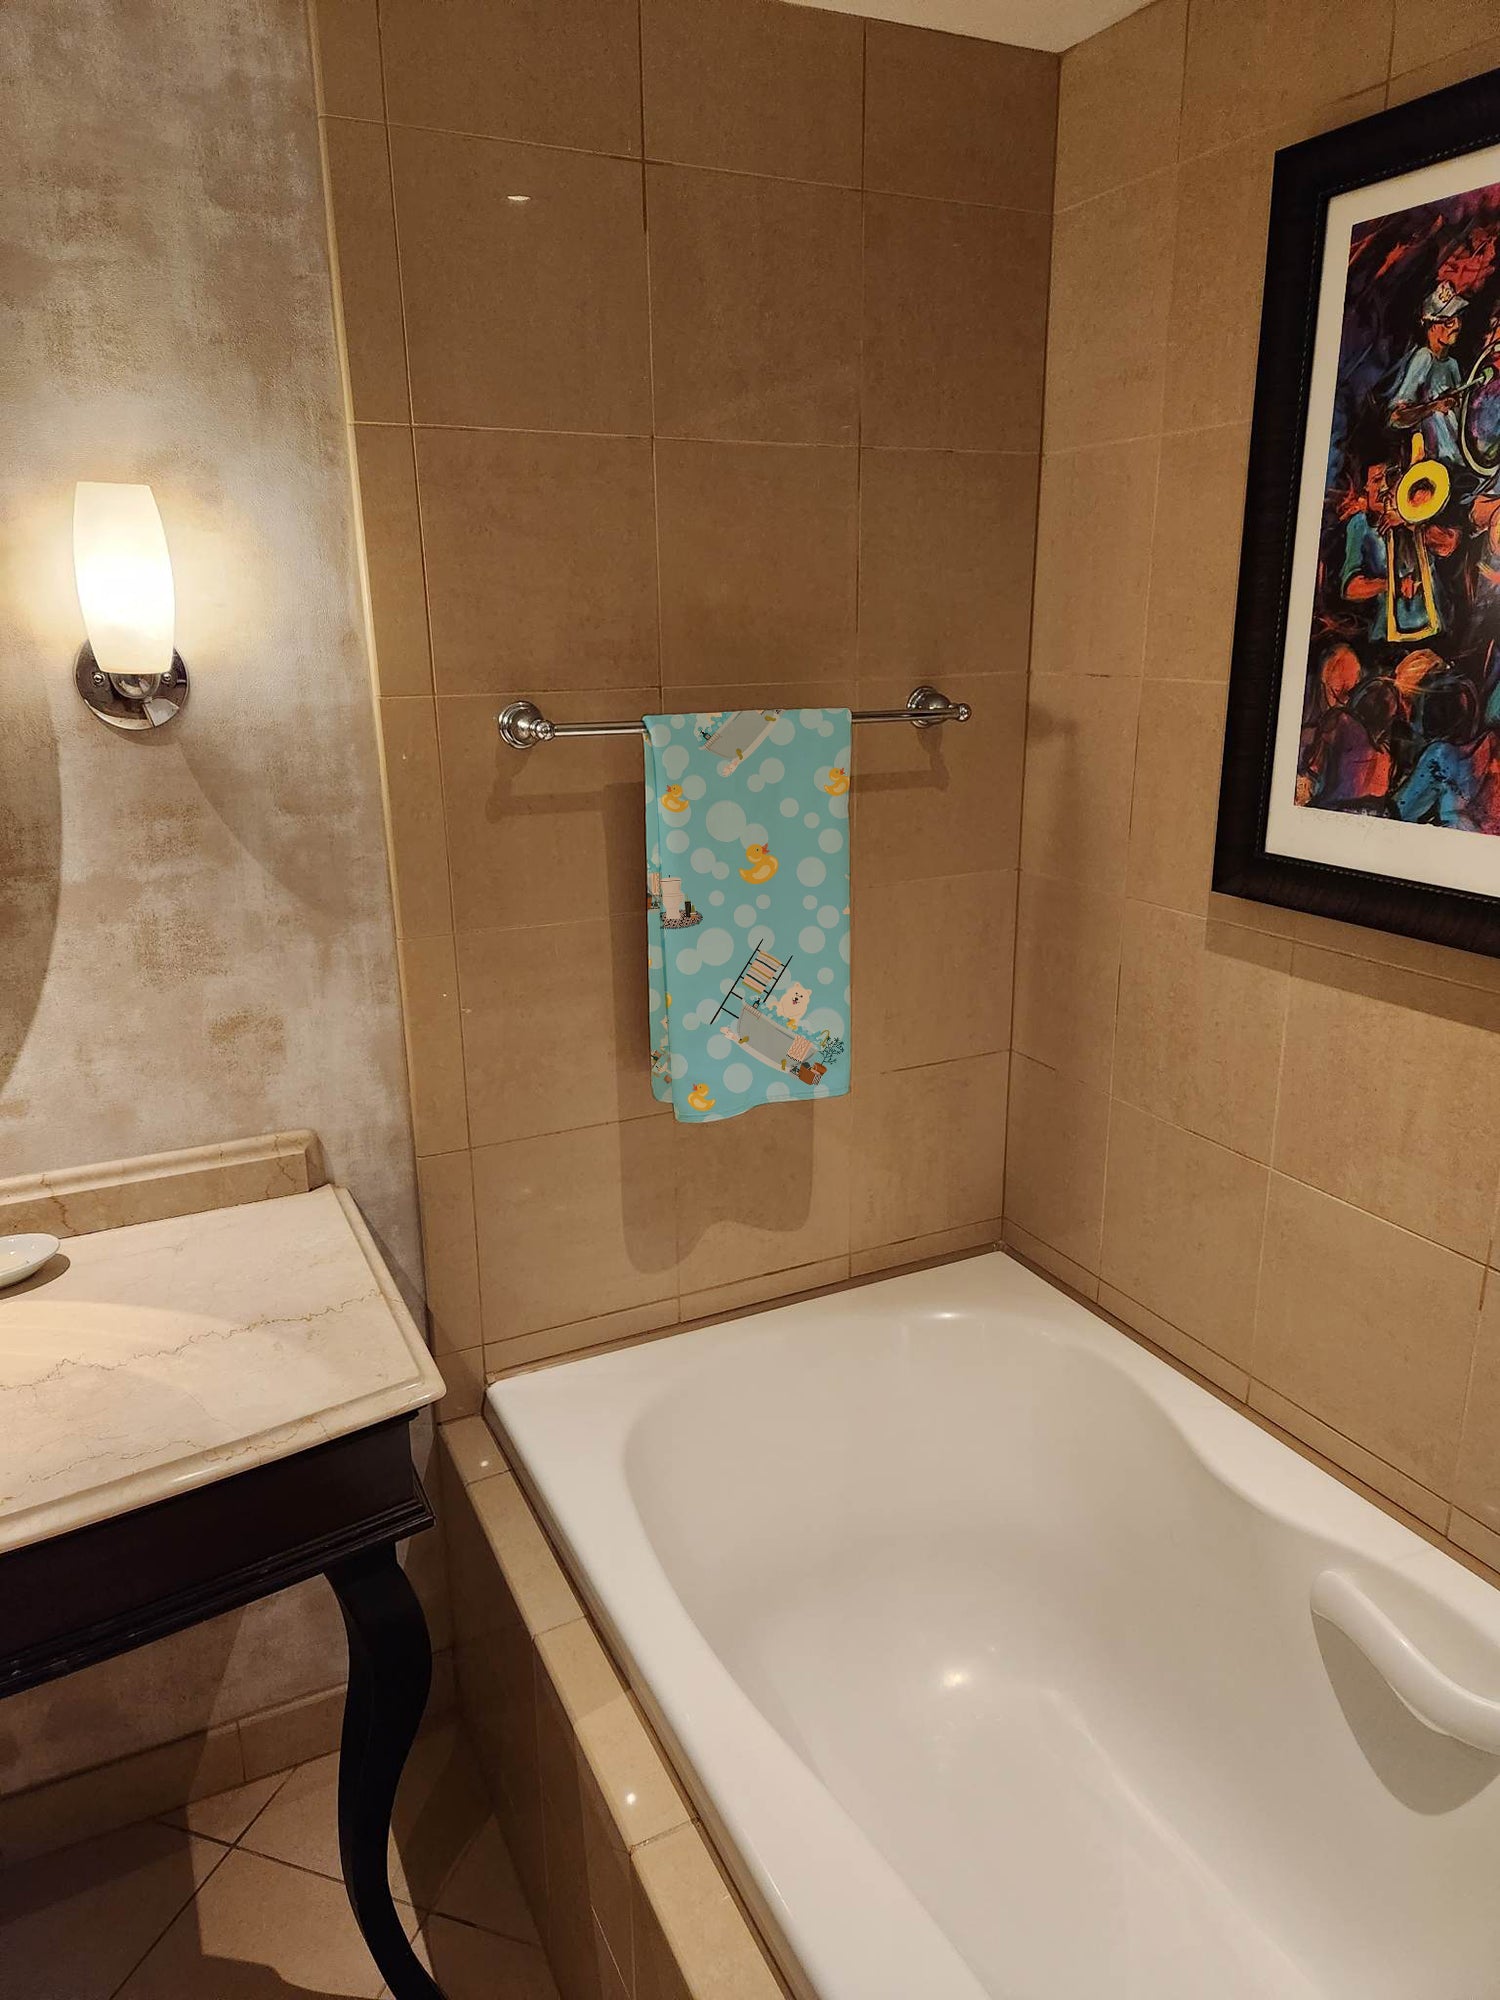 Buy this Samoyed in Bathtub Bath Towel Large